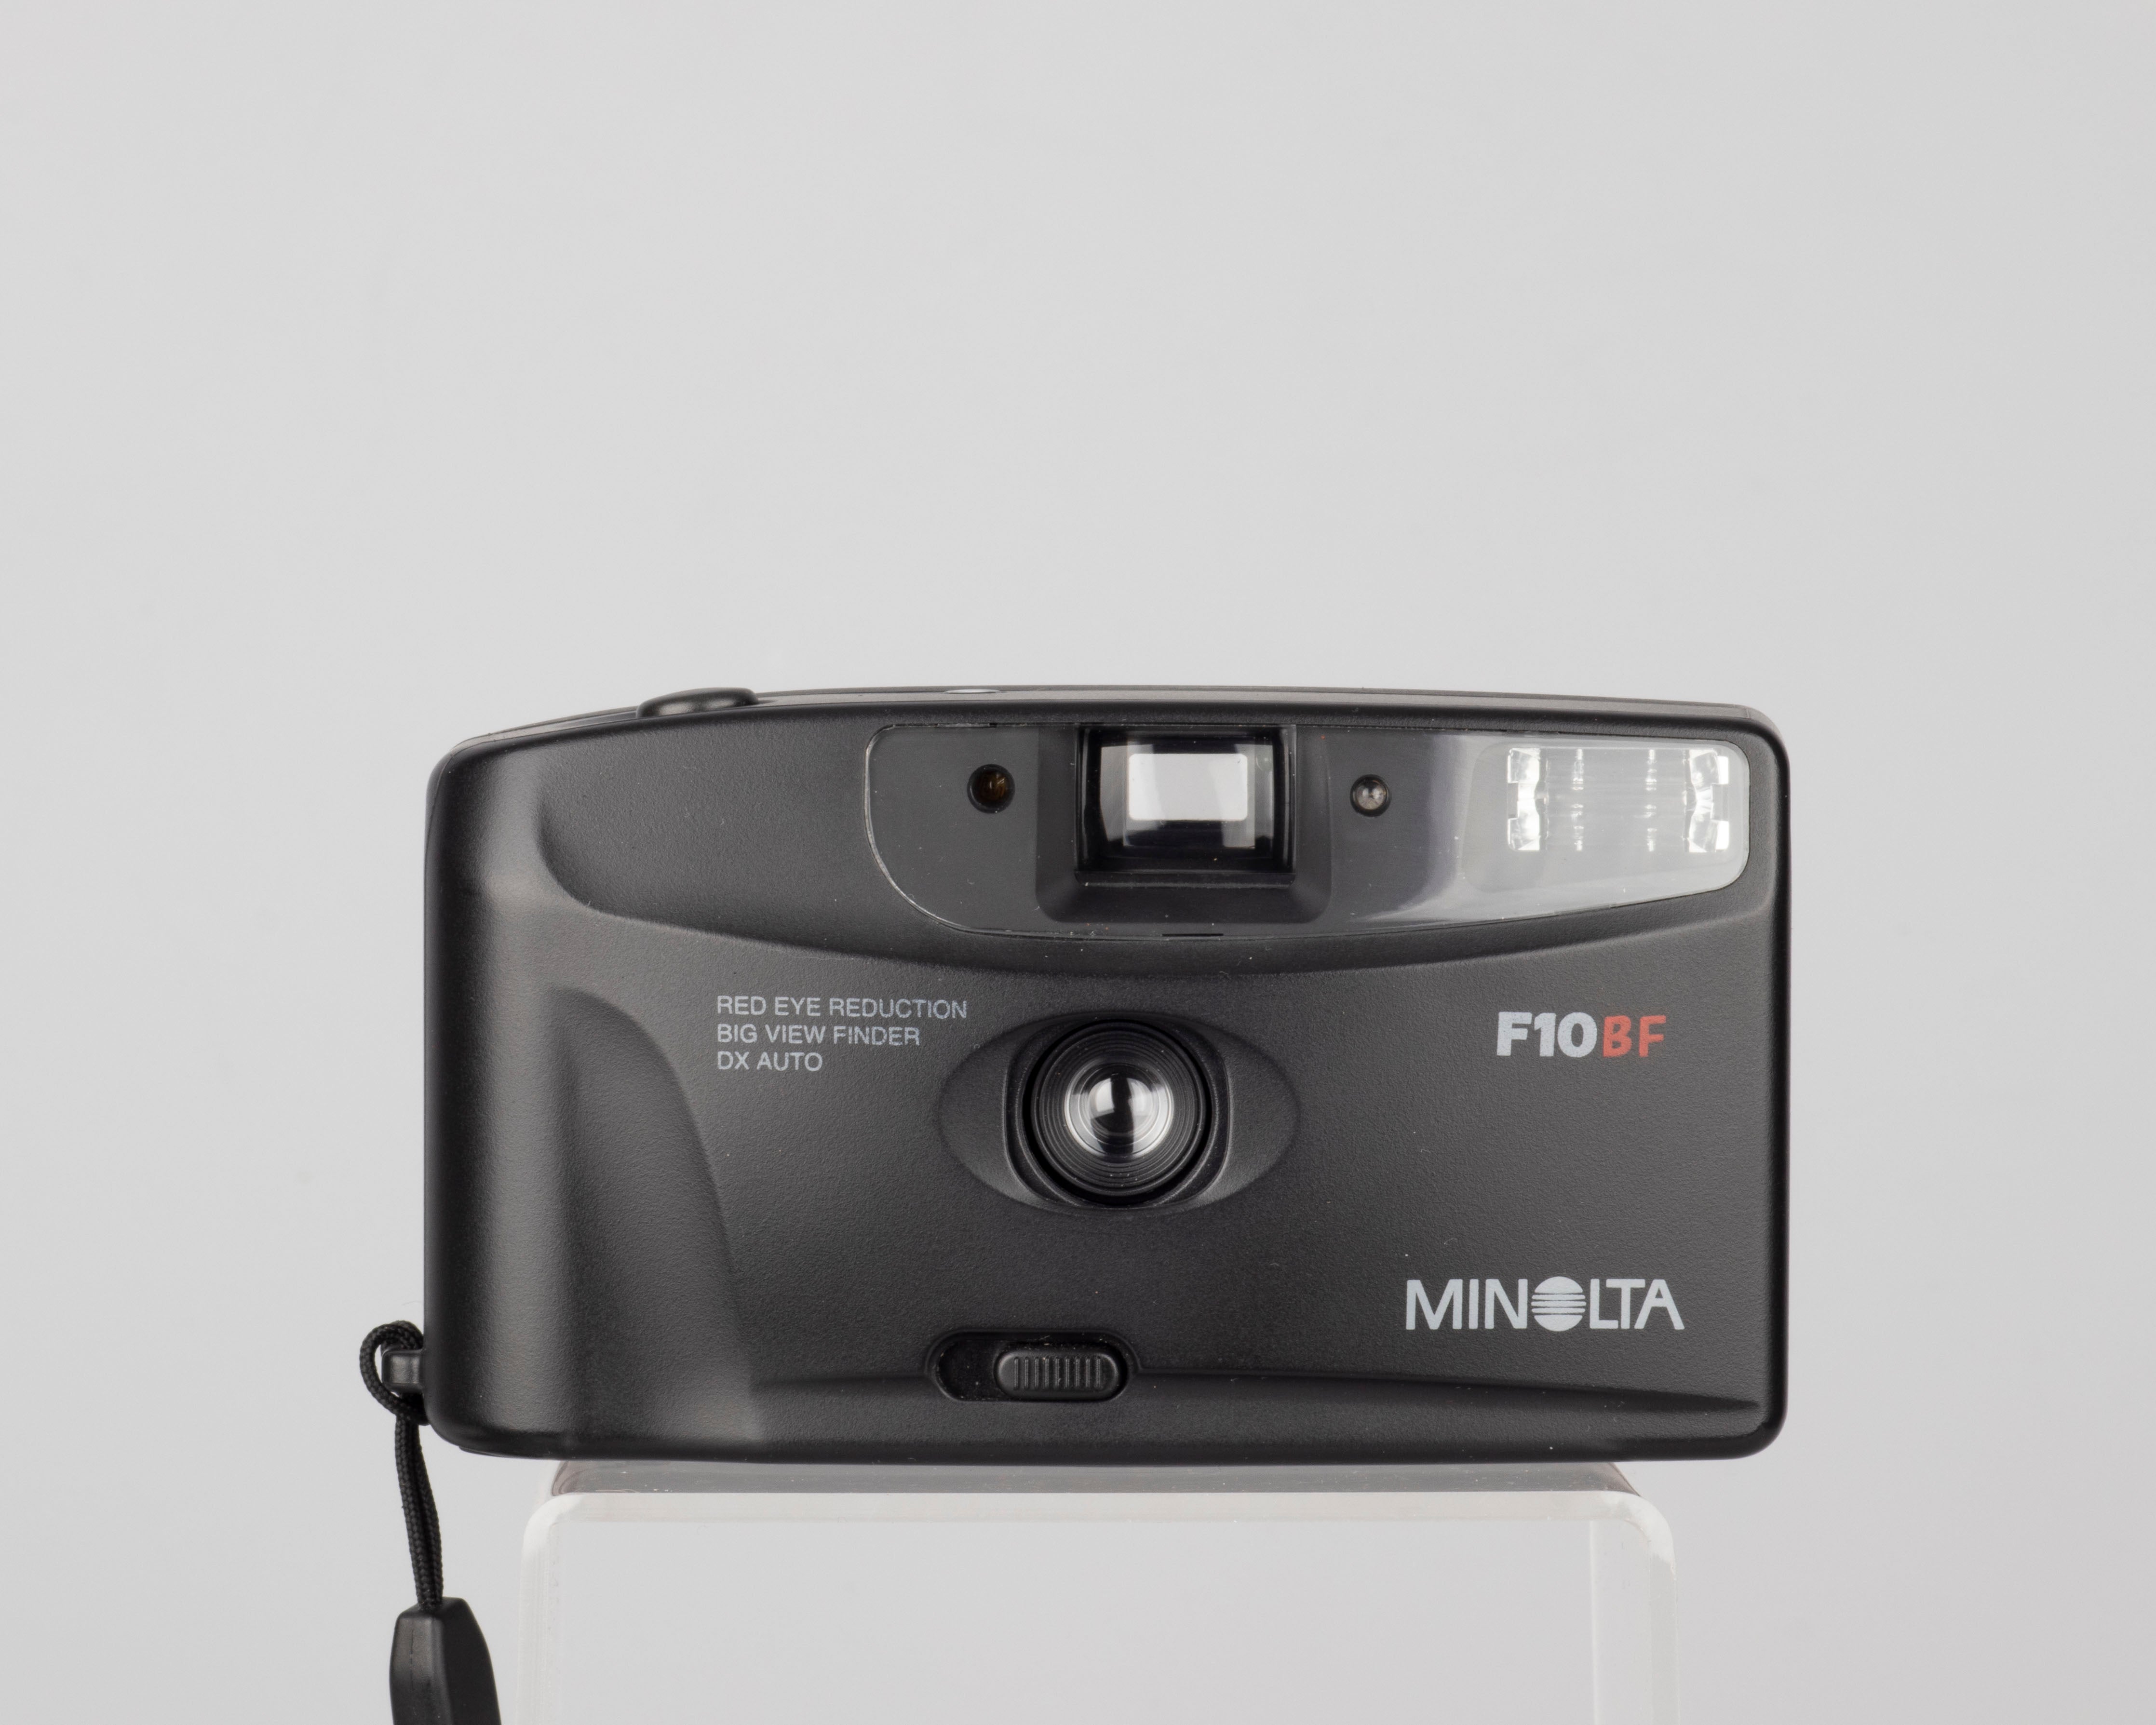 Minolta F10 BF 35mm film camera w/case and manual (serial 37824156 